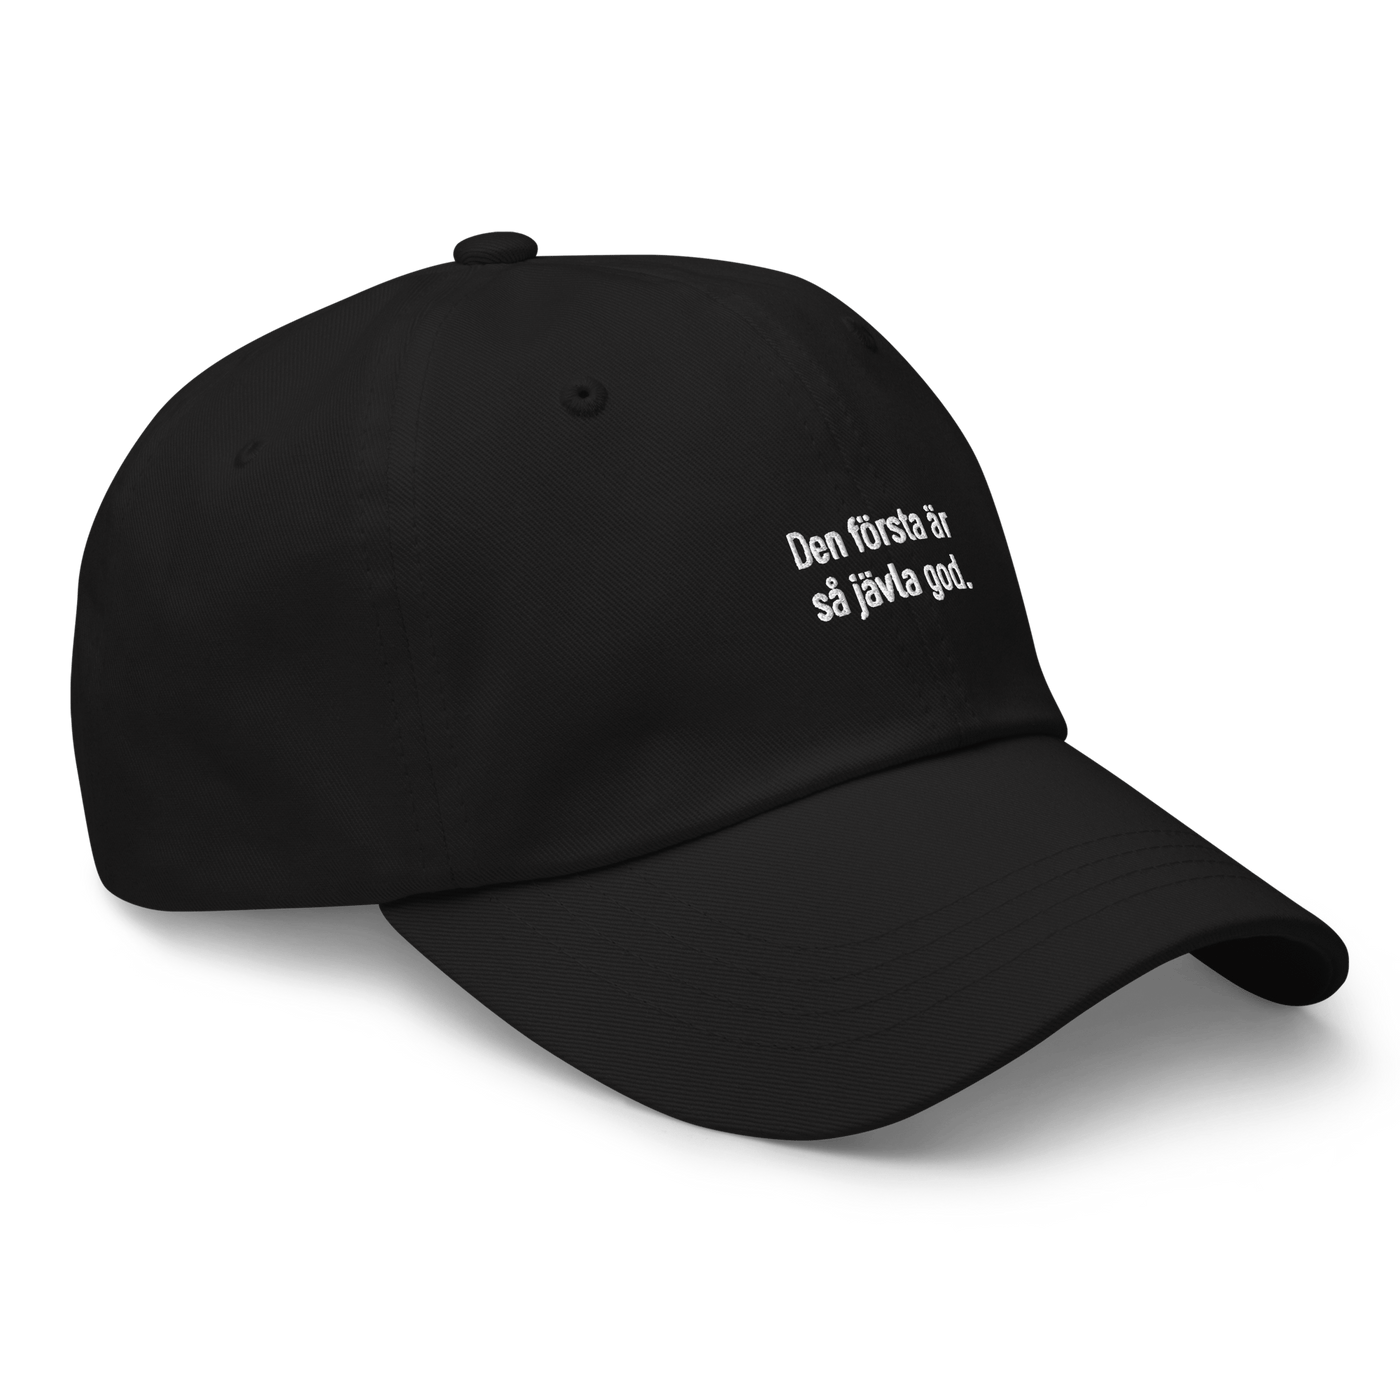 Den första Dad hat - Black - - Just Another Cap Store